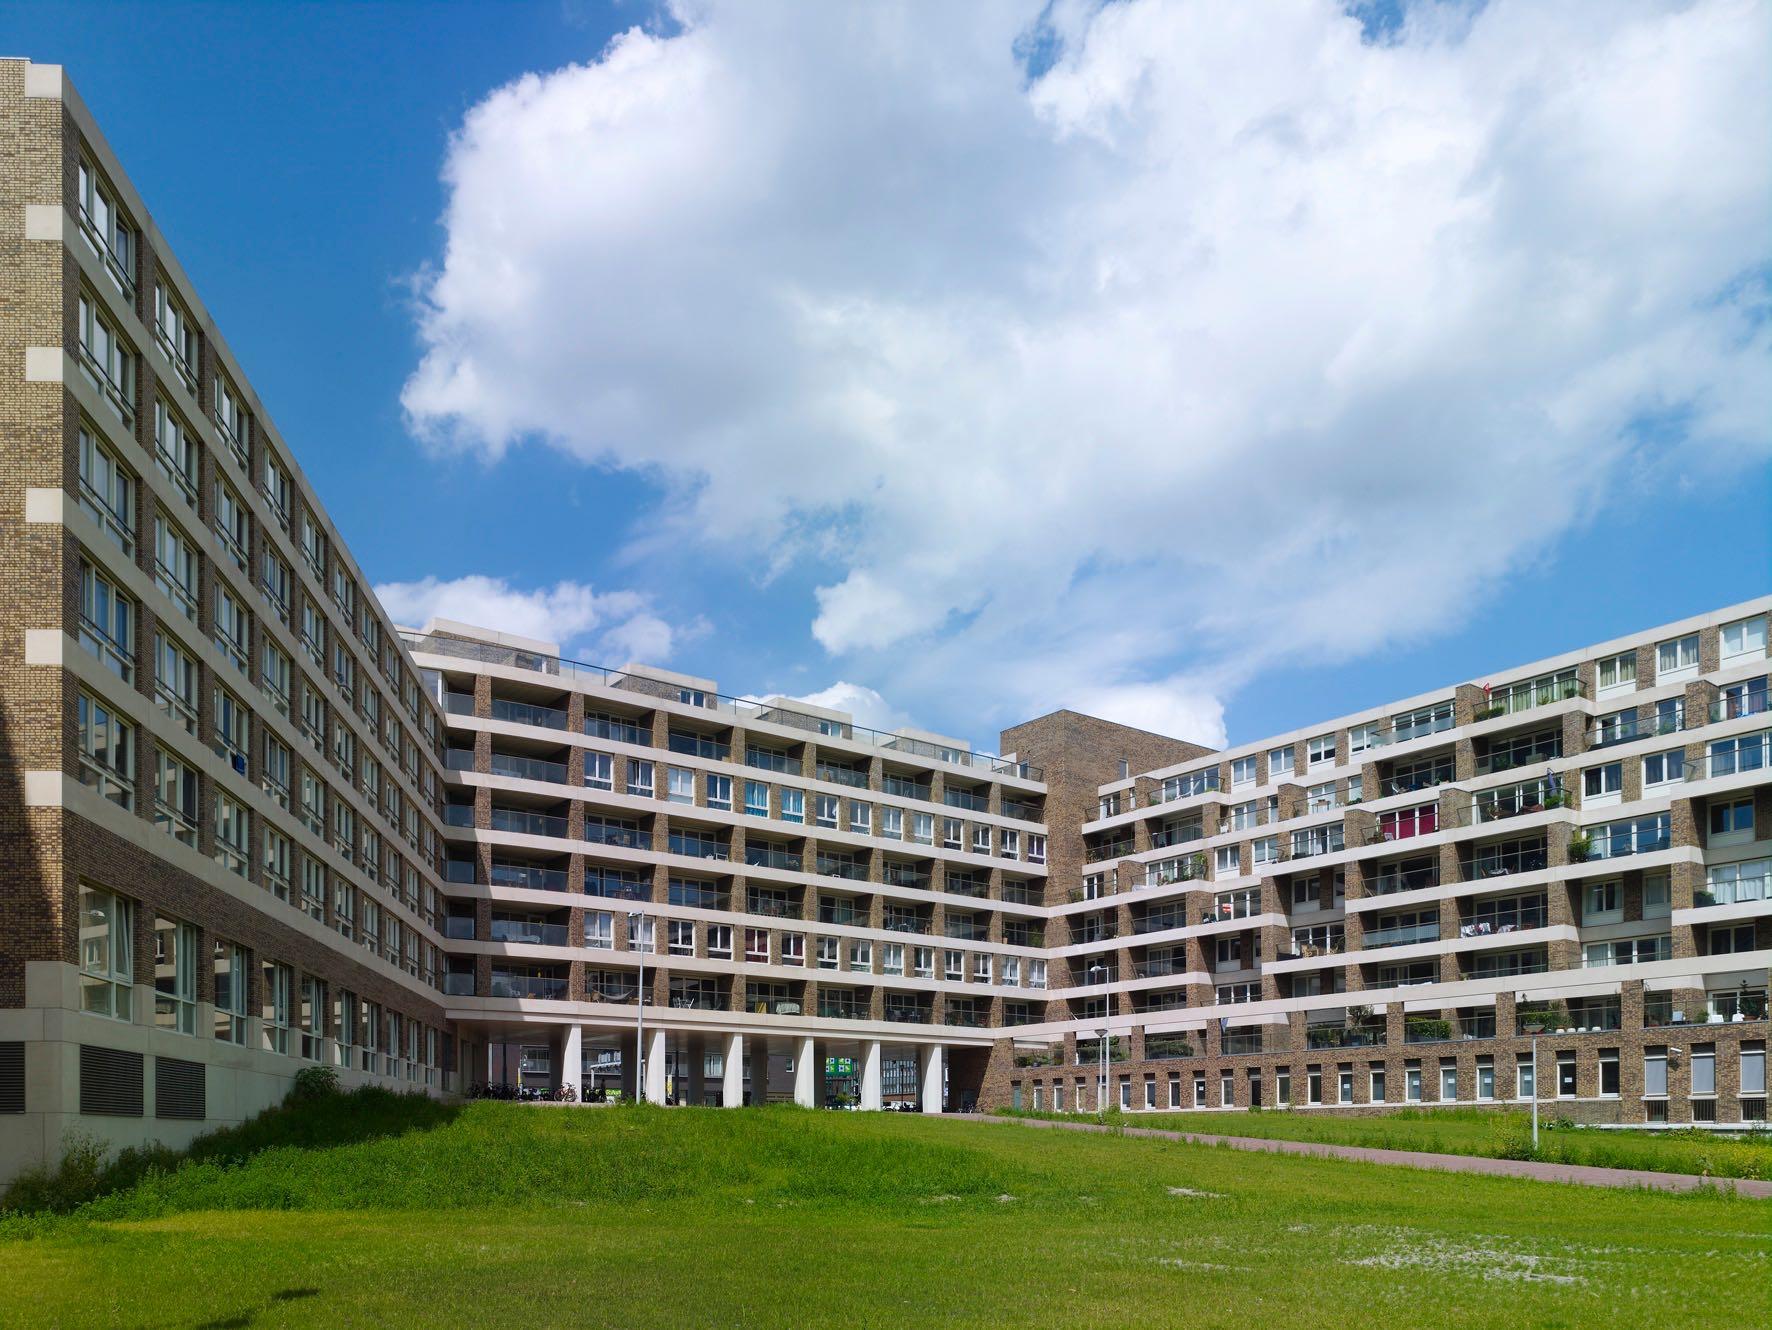 Appartementen Bos en Lommer, Amsterdam - Geurst & Schulze Architecten